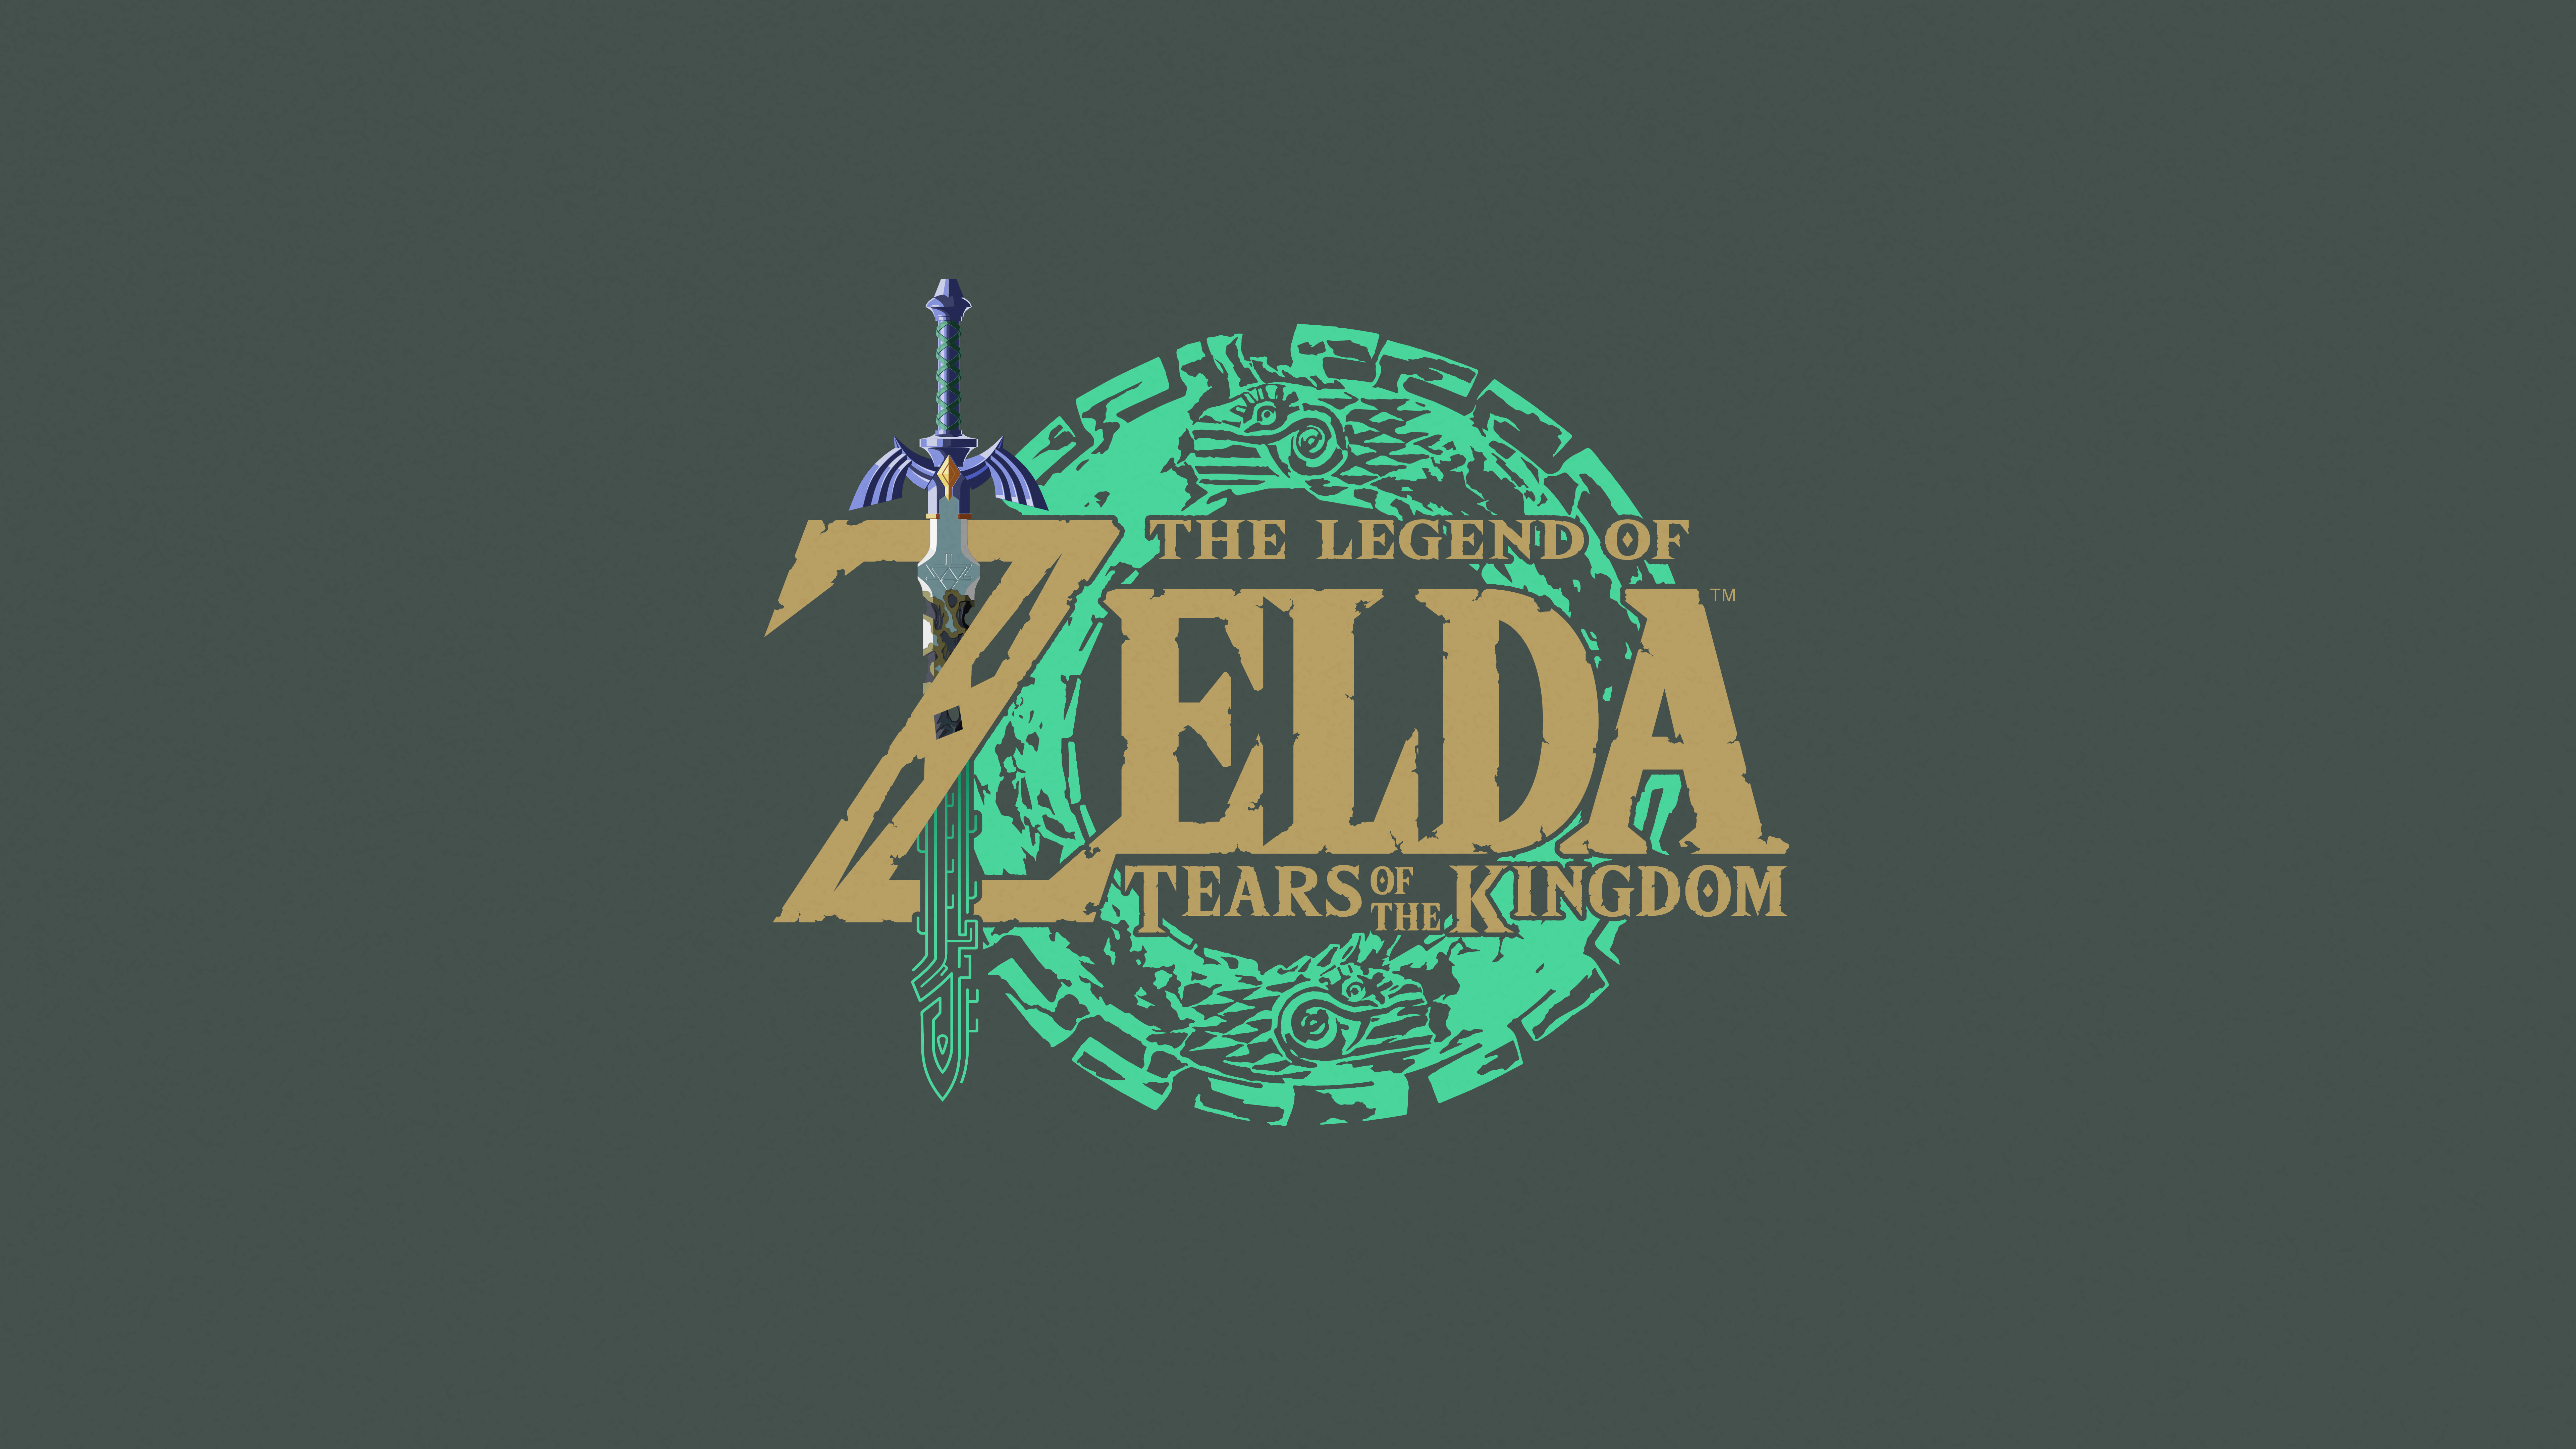 General 7680x4320 Zelda The Legend of Zelda: Tears of the Kingdom The Legend of Zelda video games logo Nintendo